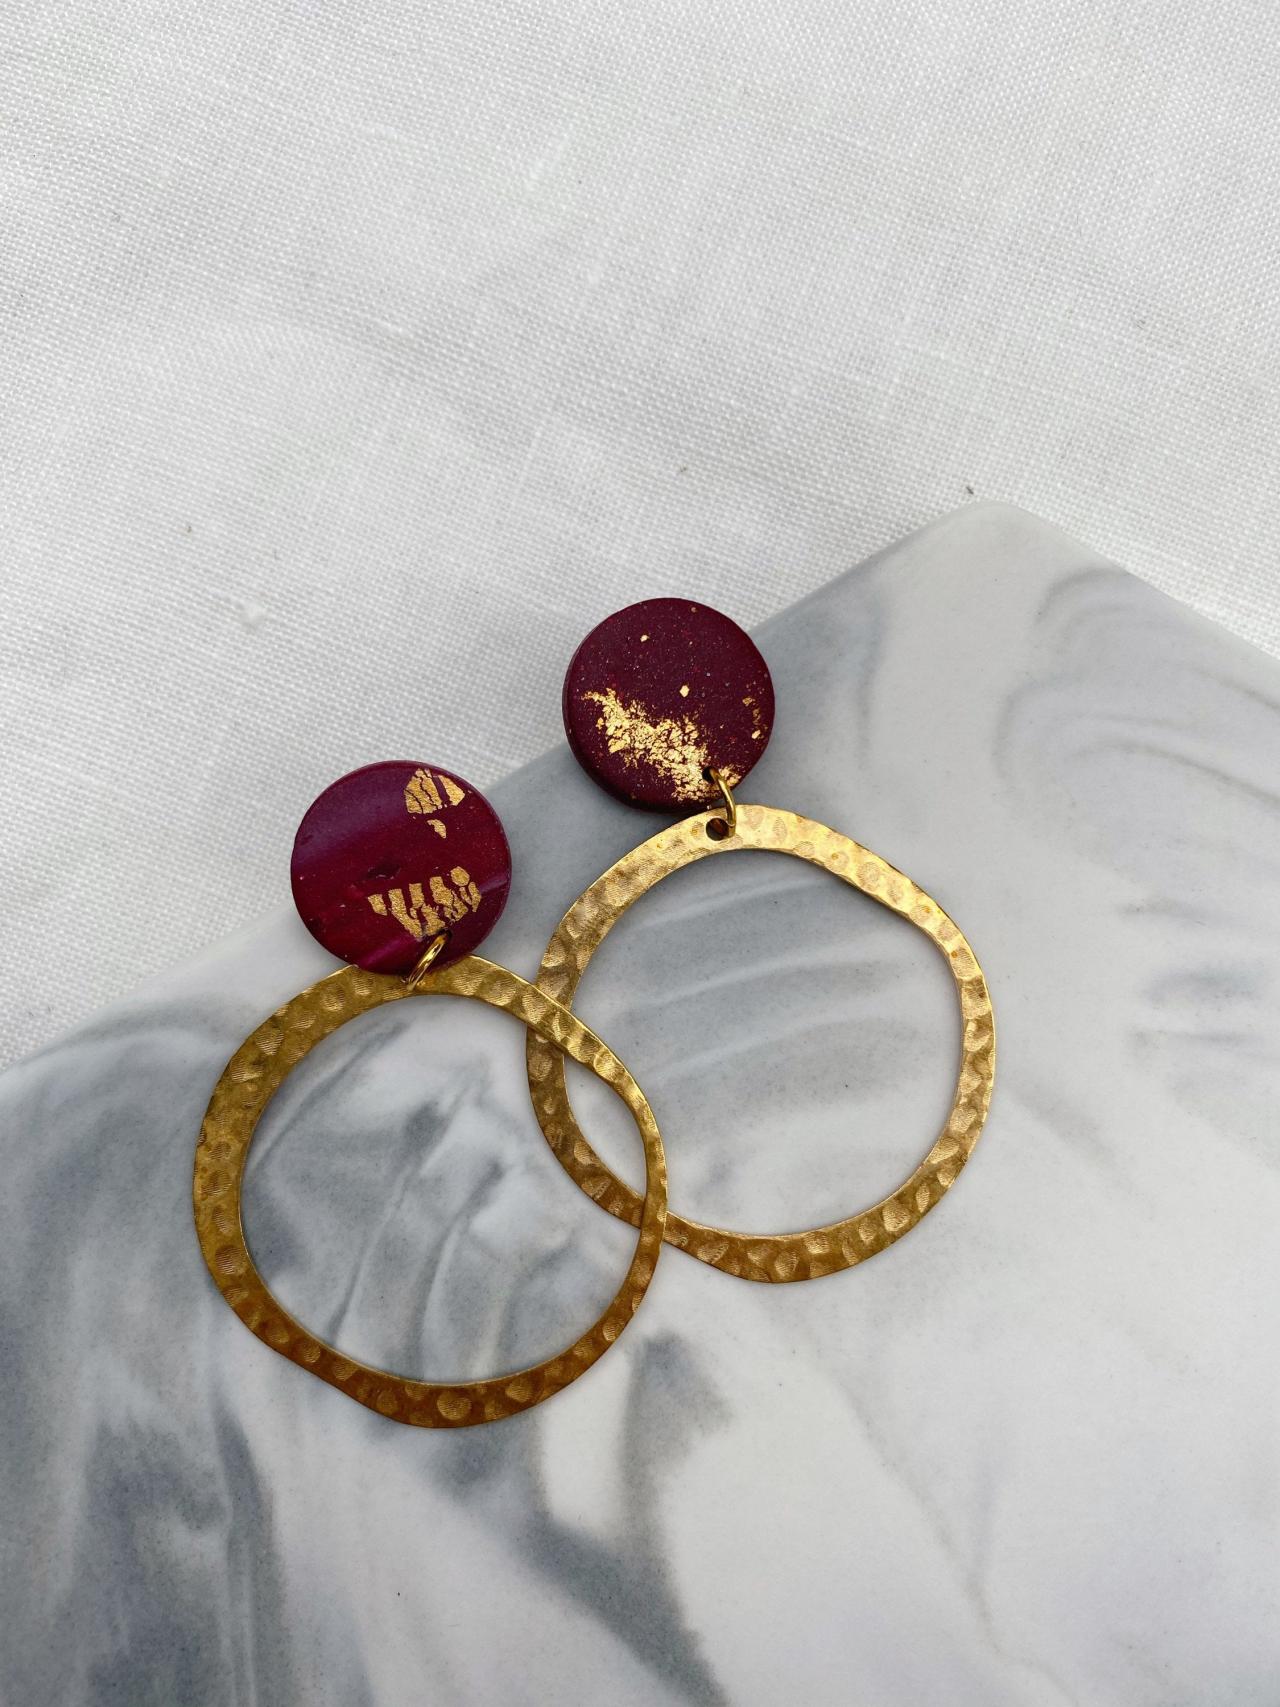 Brass Polymer Clay Ring Hoop Earrings / Gift for girlfriends / Handmade Statement Earrings